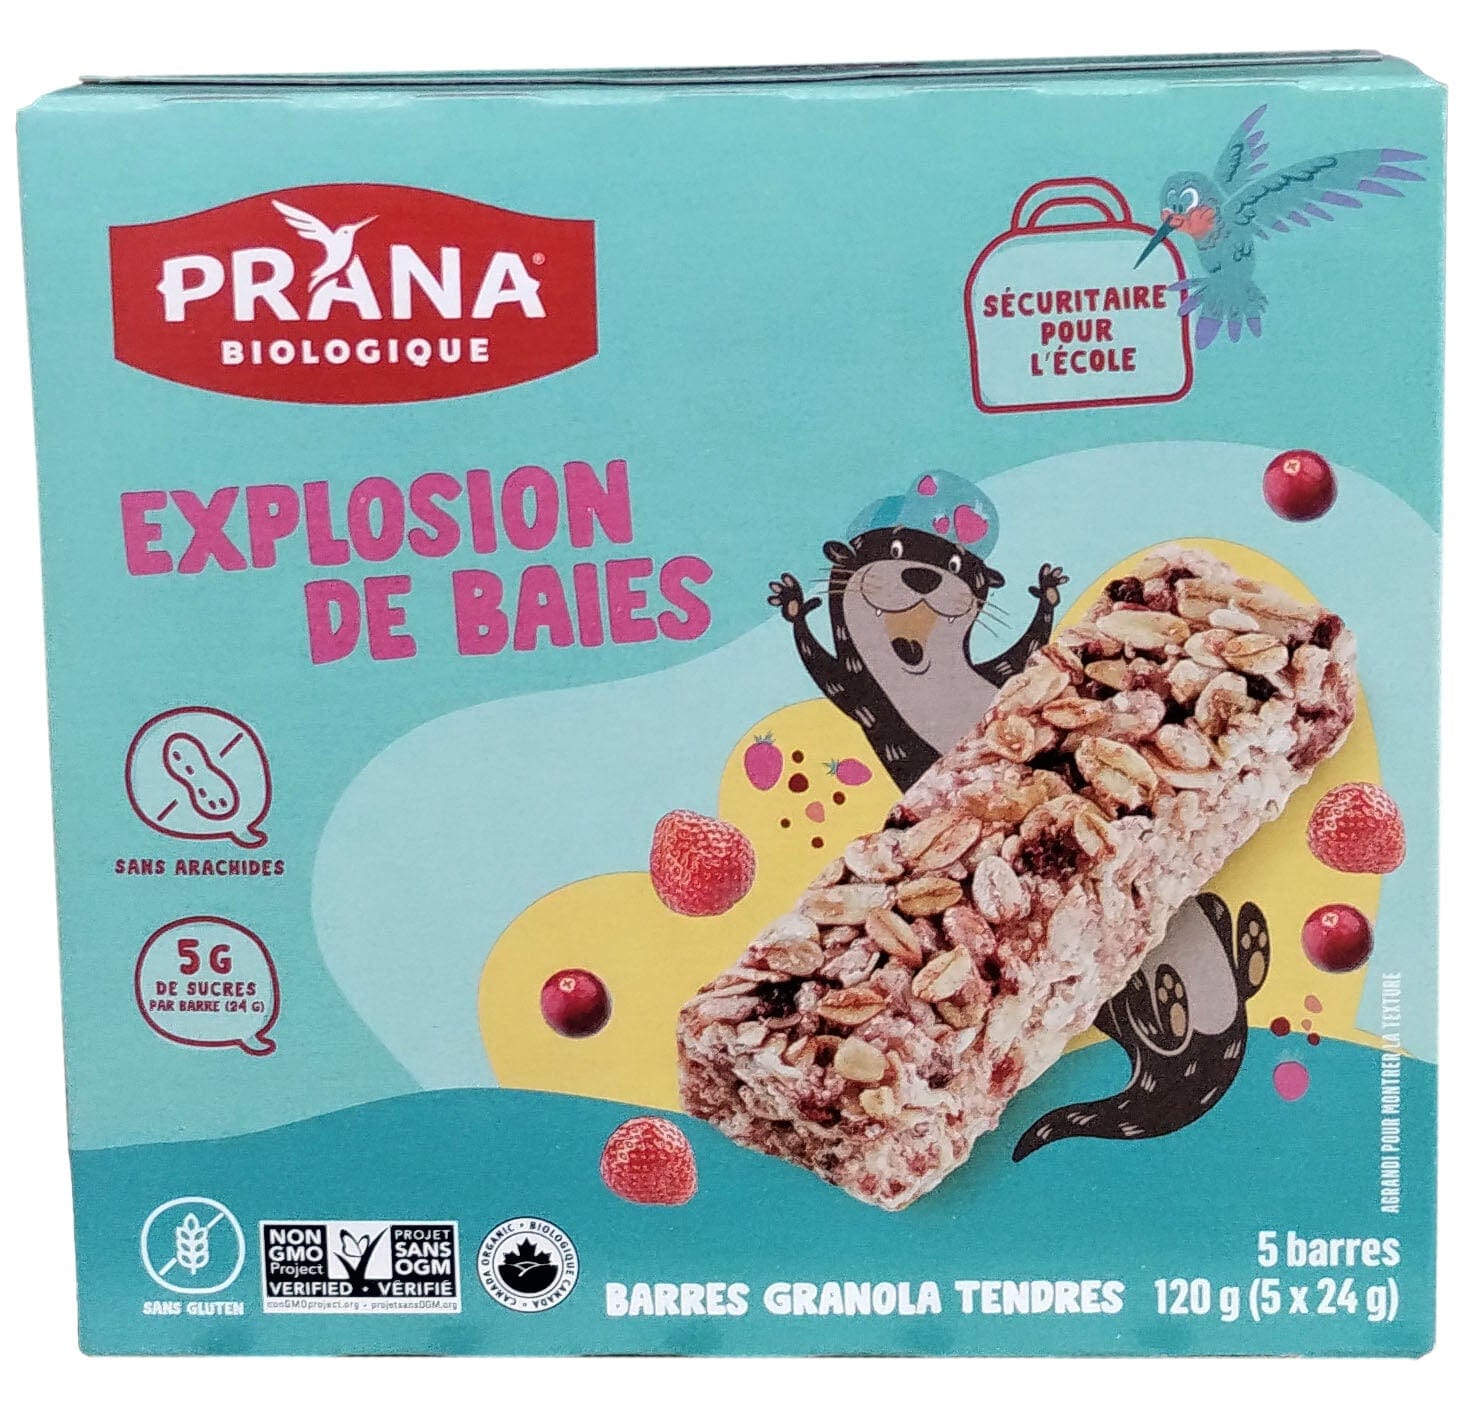 PRANA Épicerie Barres tendres granola explosion de baies  bio 5x24g